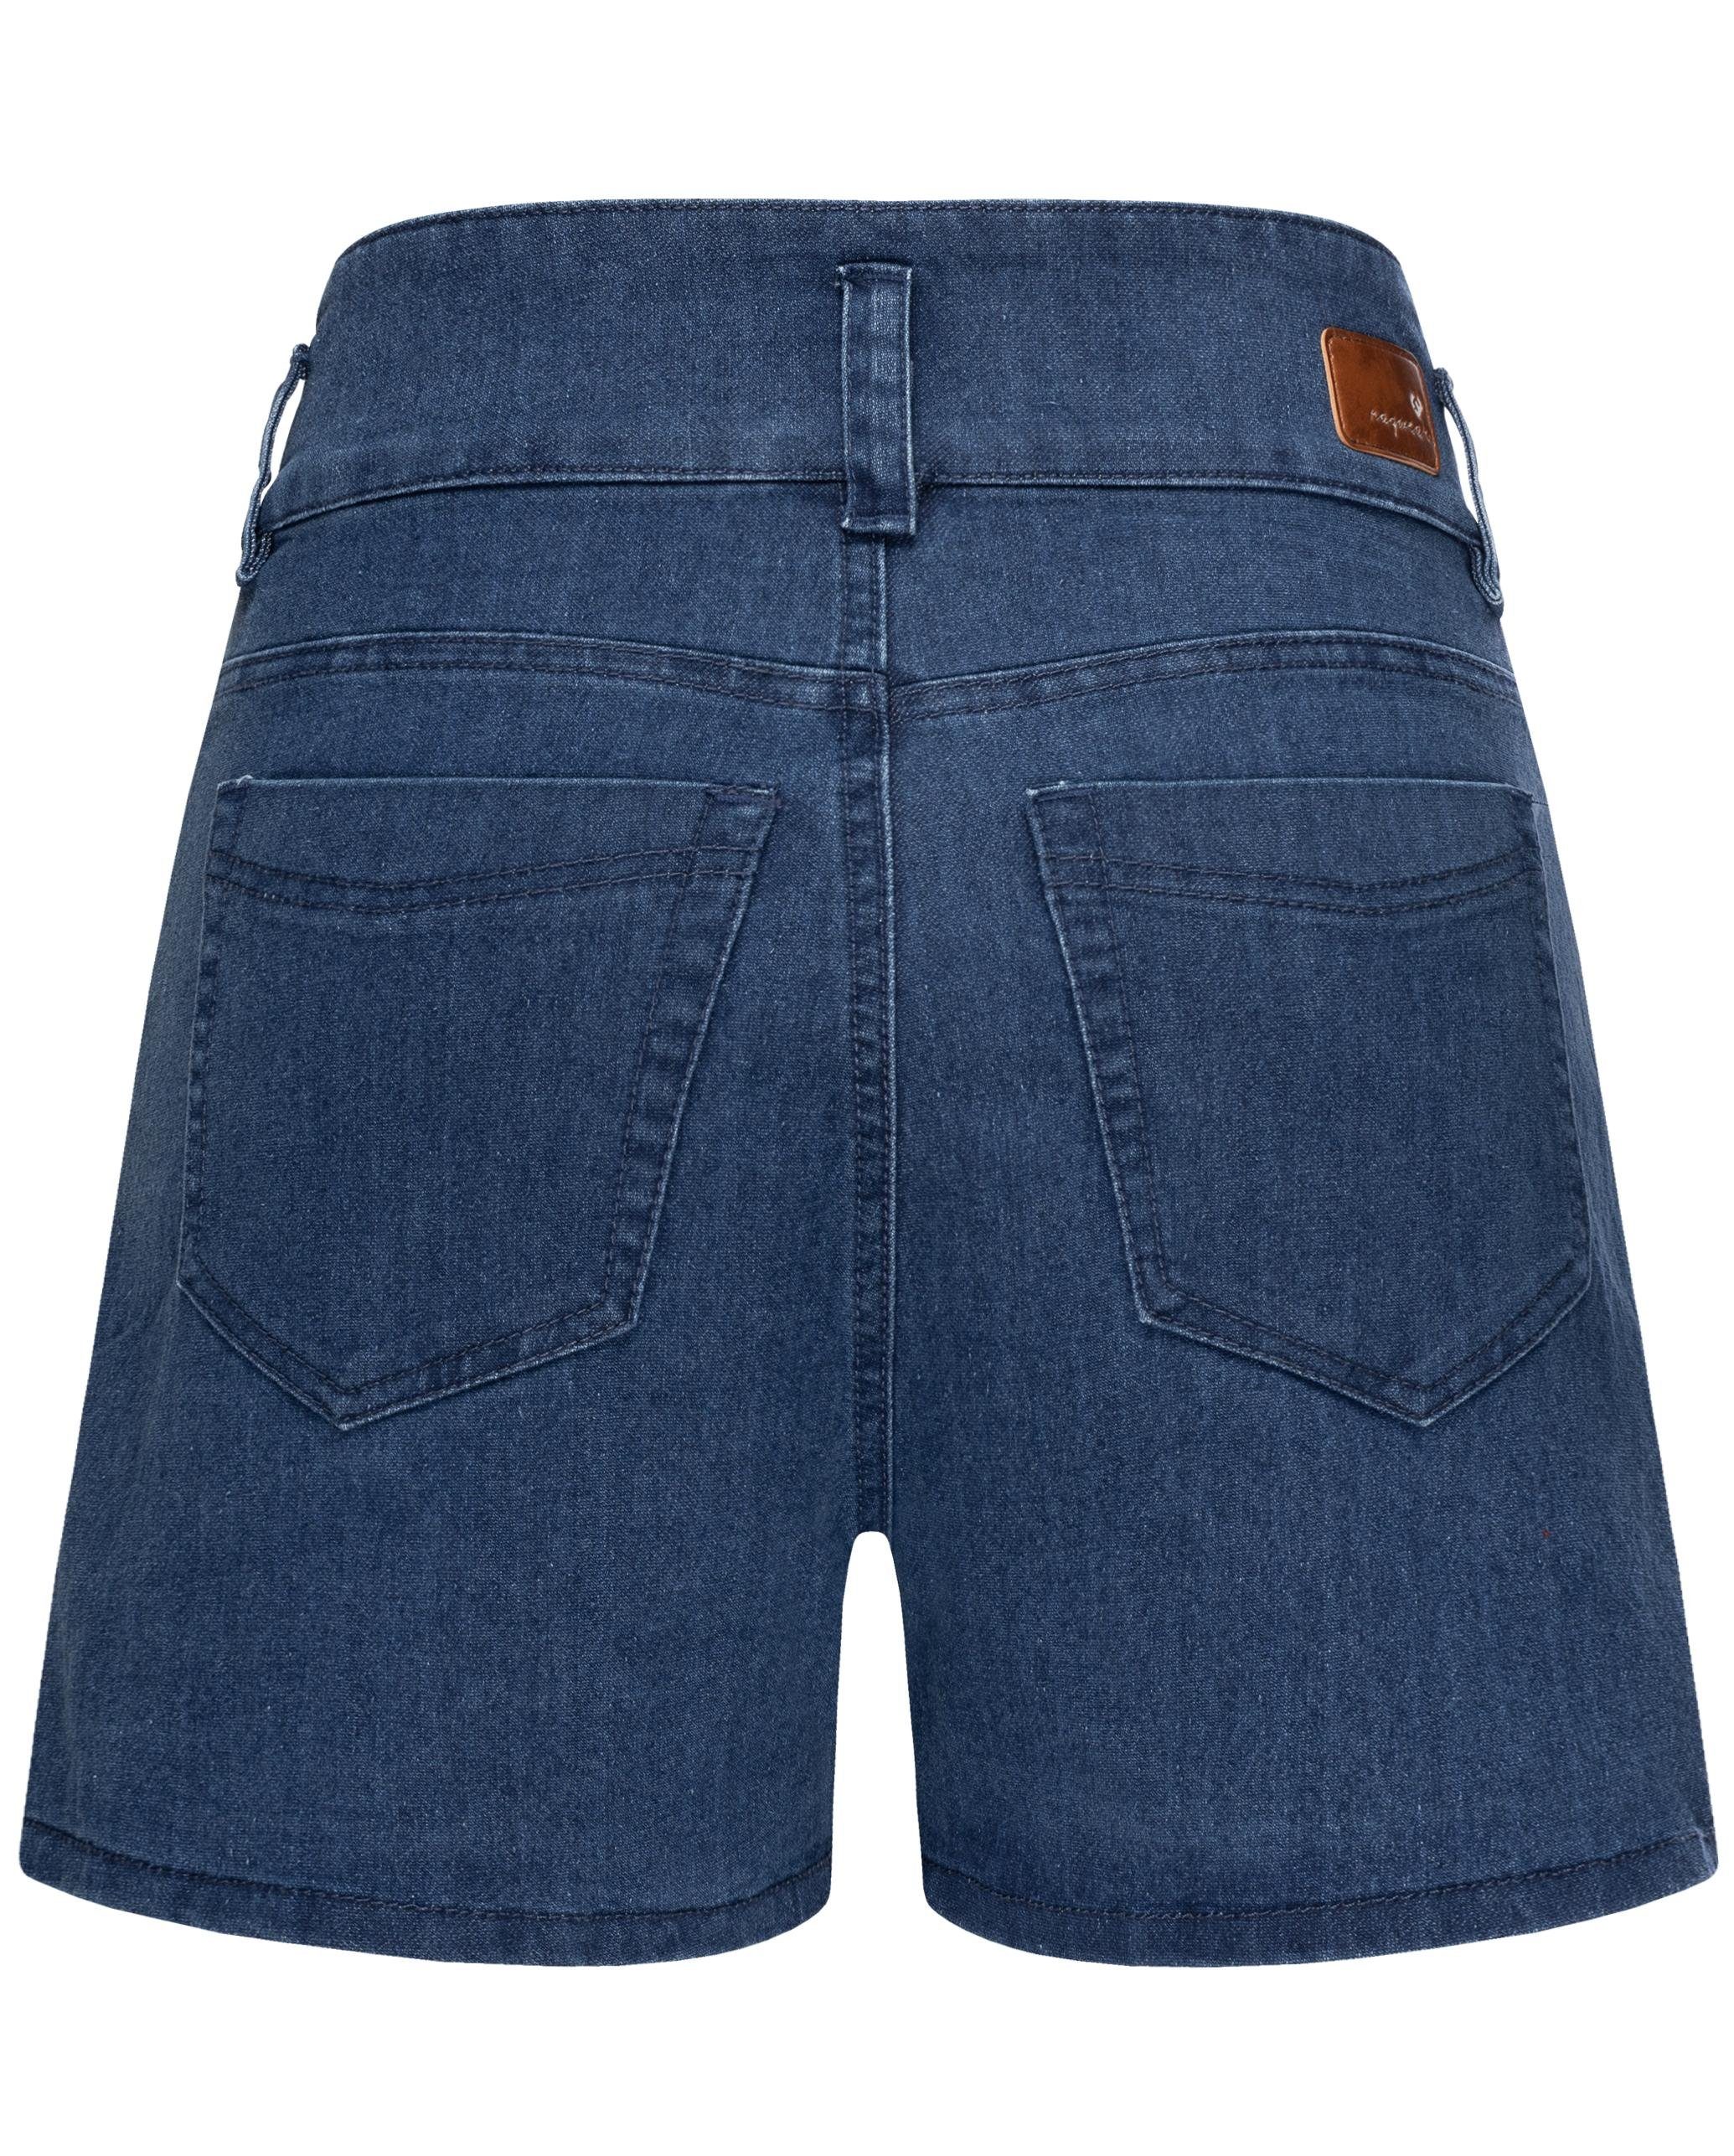 Ragwear Shorts in indigo Sommerhose Suzzie Jeansoptik kurze stylische,